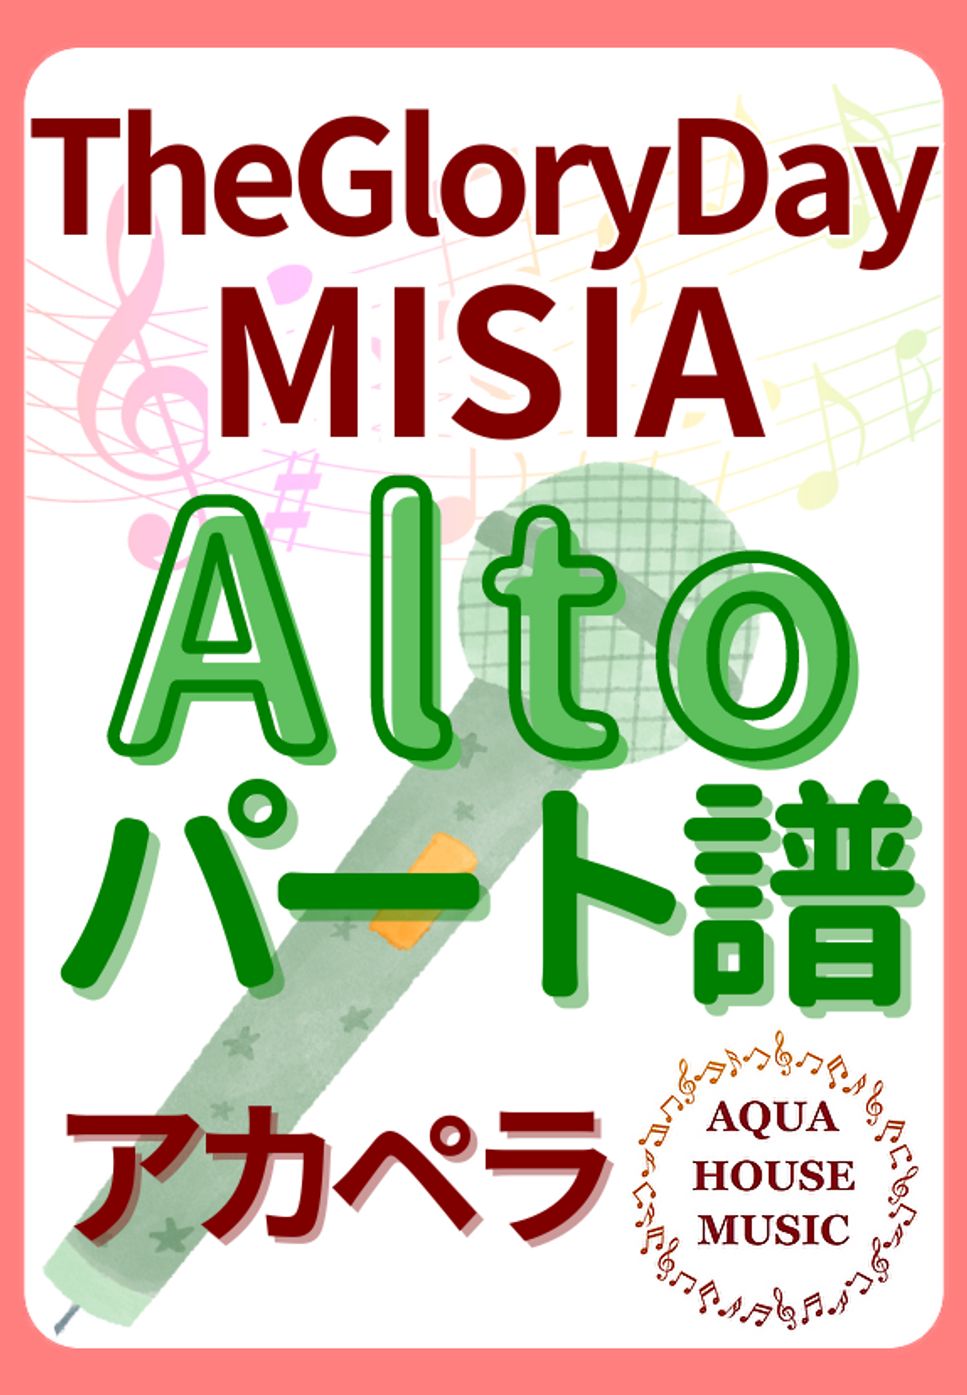 MISIA - The Glory Day (アカペラ楽譜♪Altoパート譜) by 飯田 亜紗子